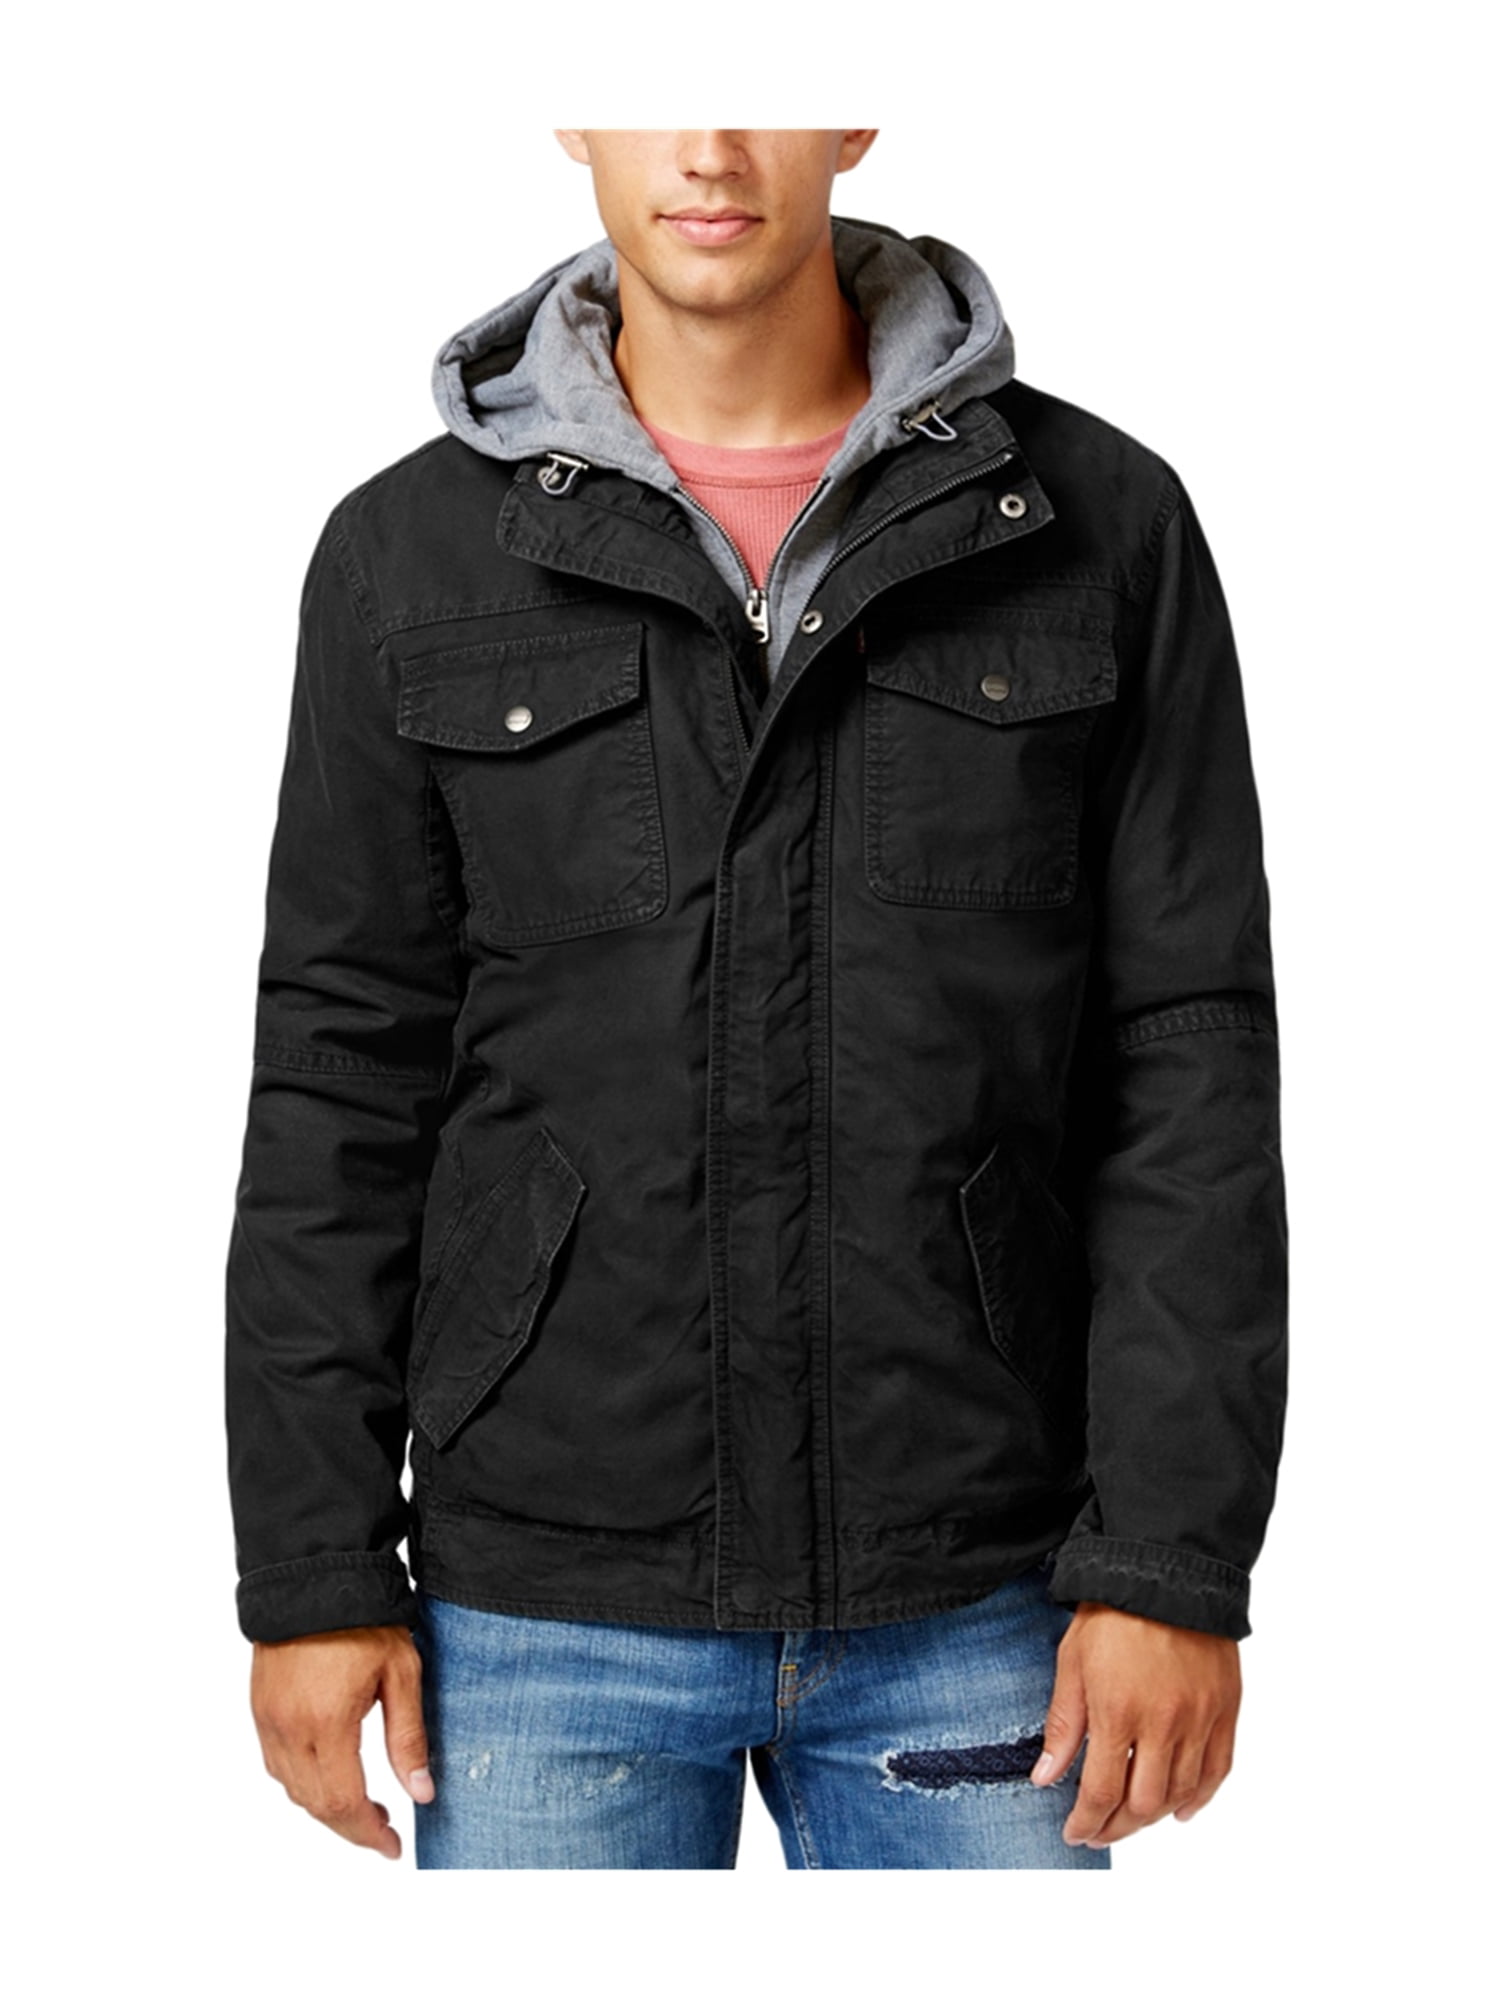 Levi's Mens Hoodie Jacket black 2XL | Walmart Canada